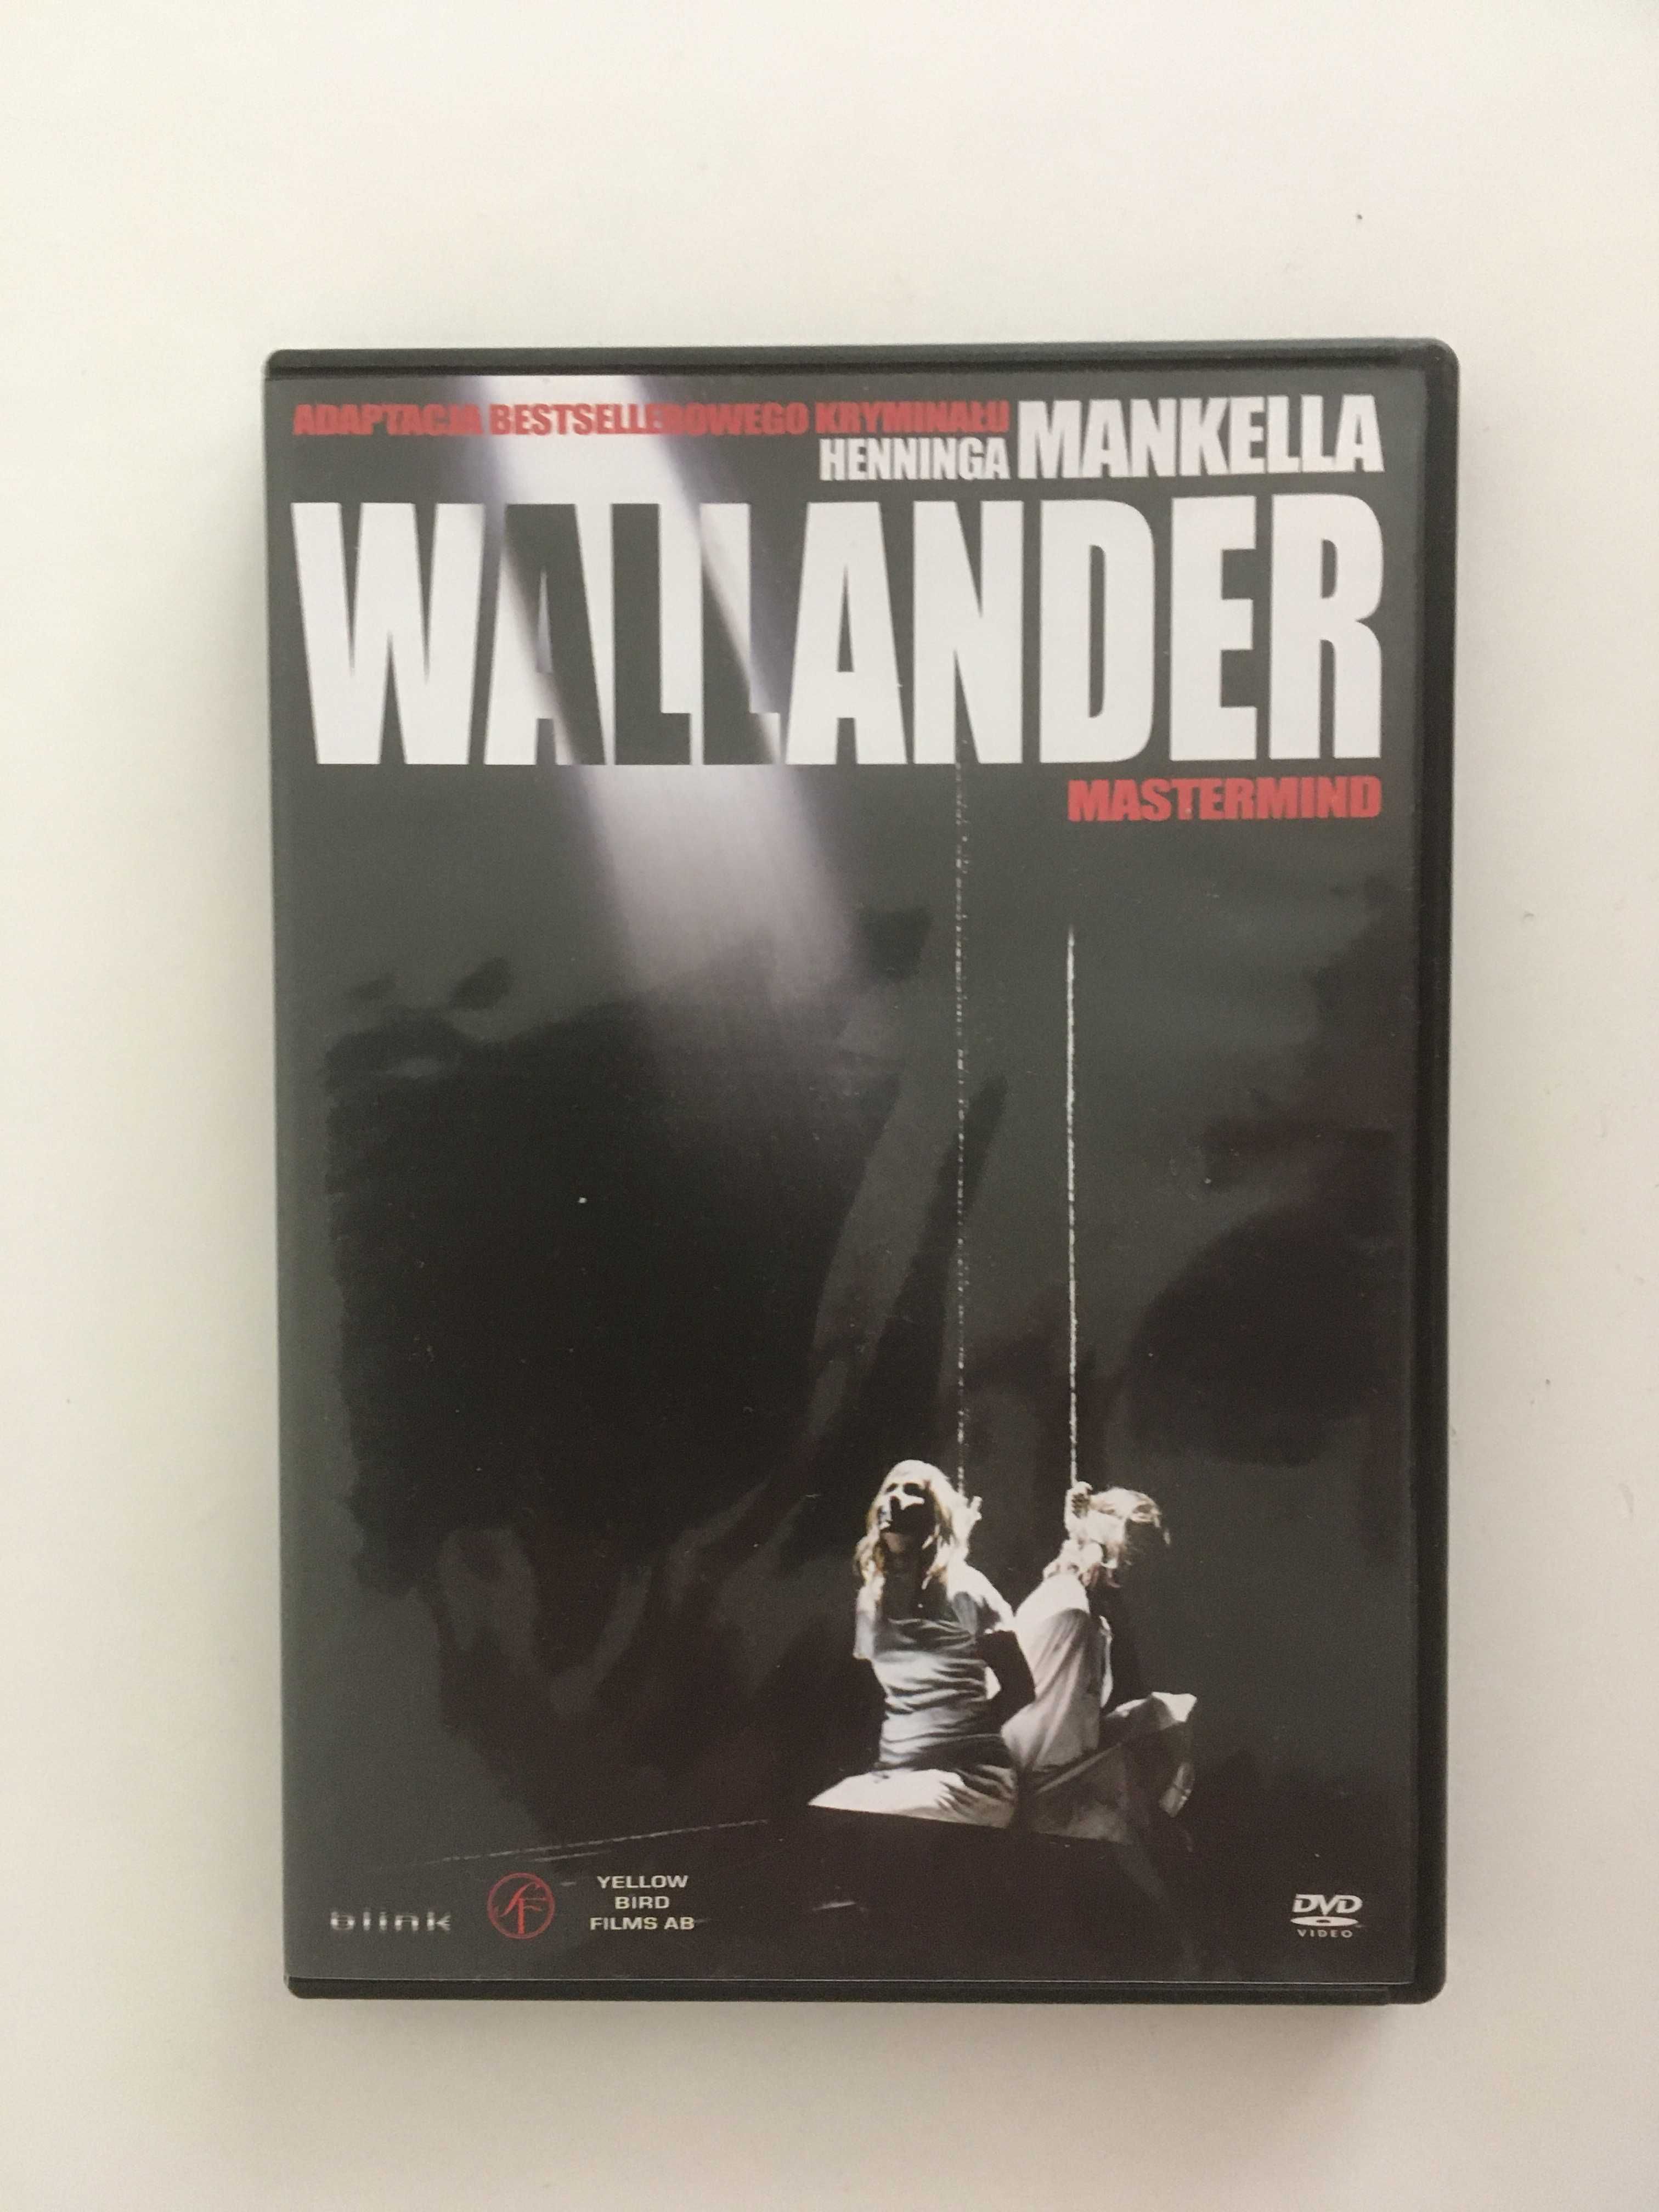 Wallander Mastermind DVD